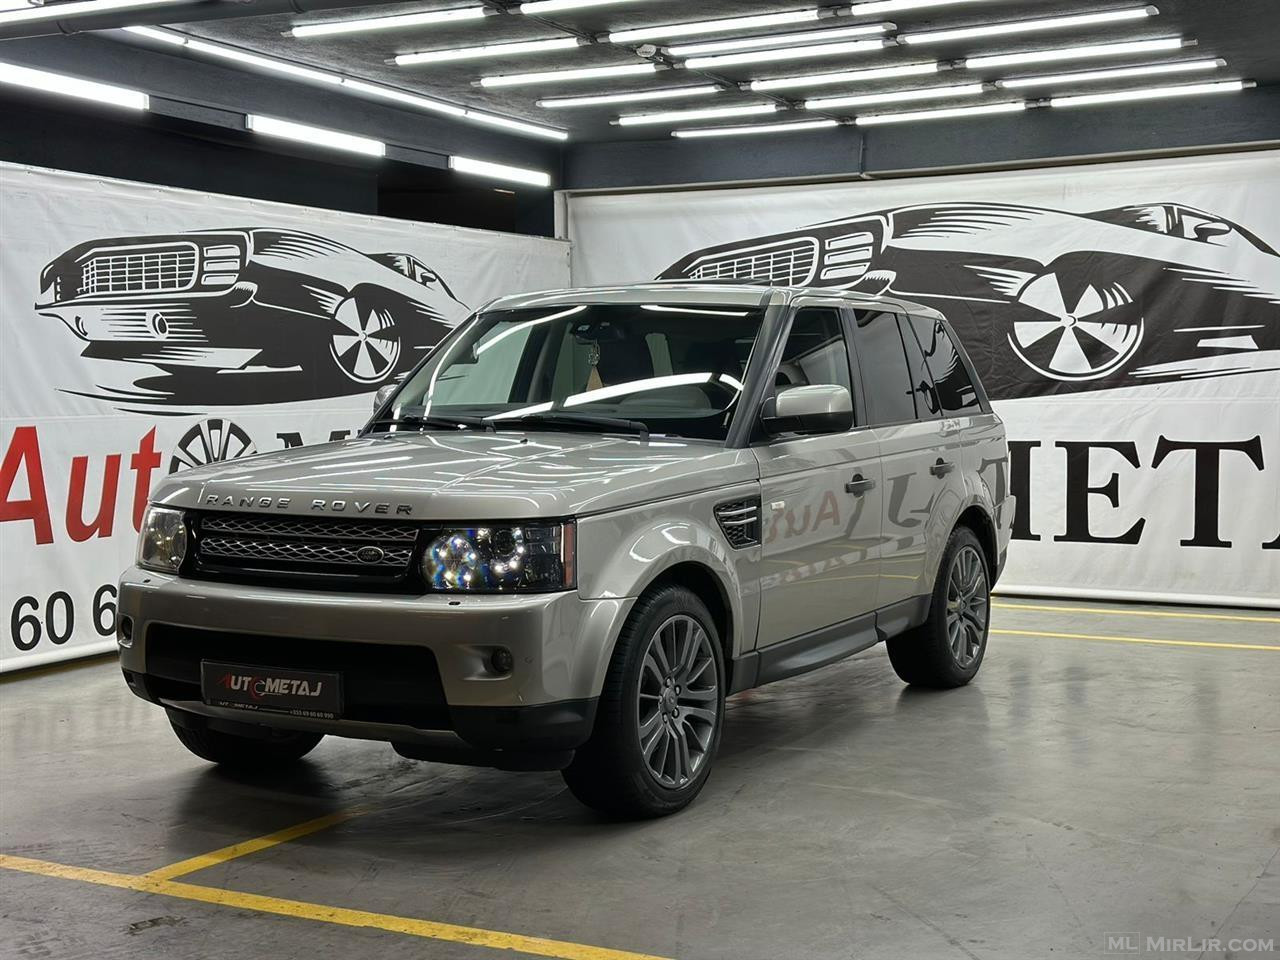 Range Rover Sport Viti Prodhimit Fundi 2011 3.0 Diesel